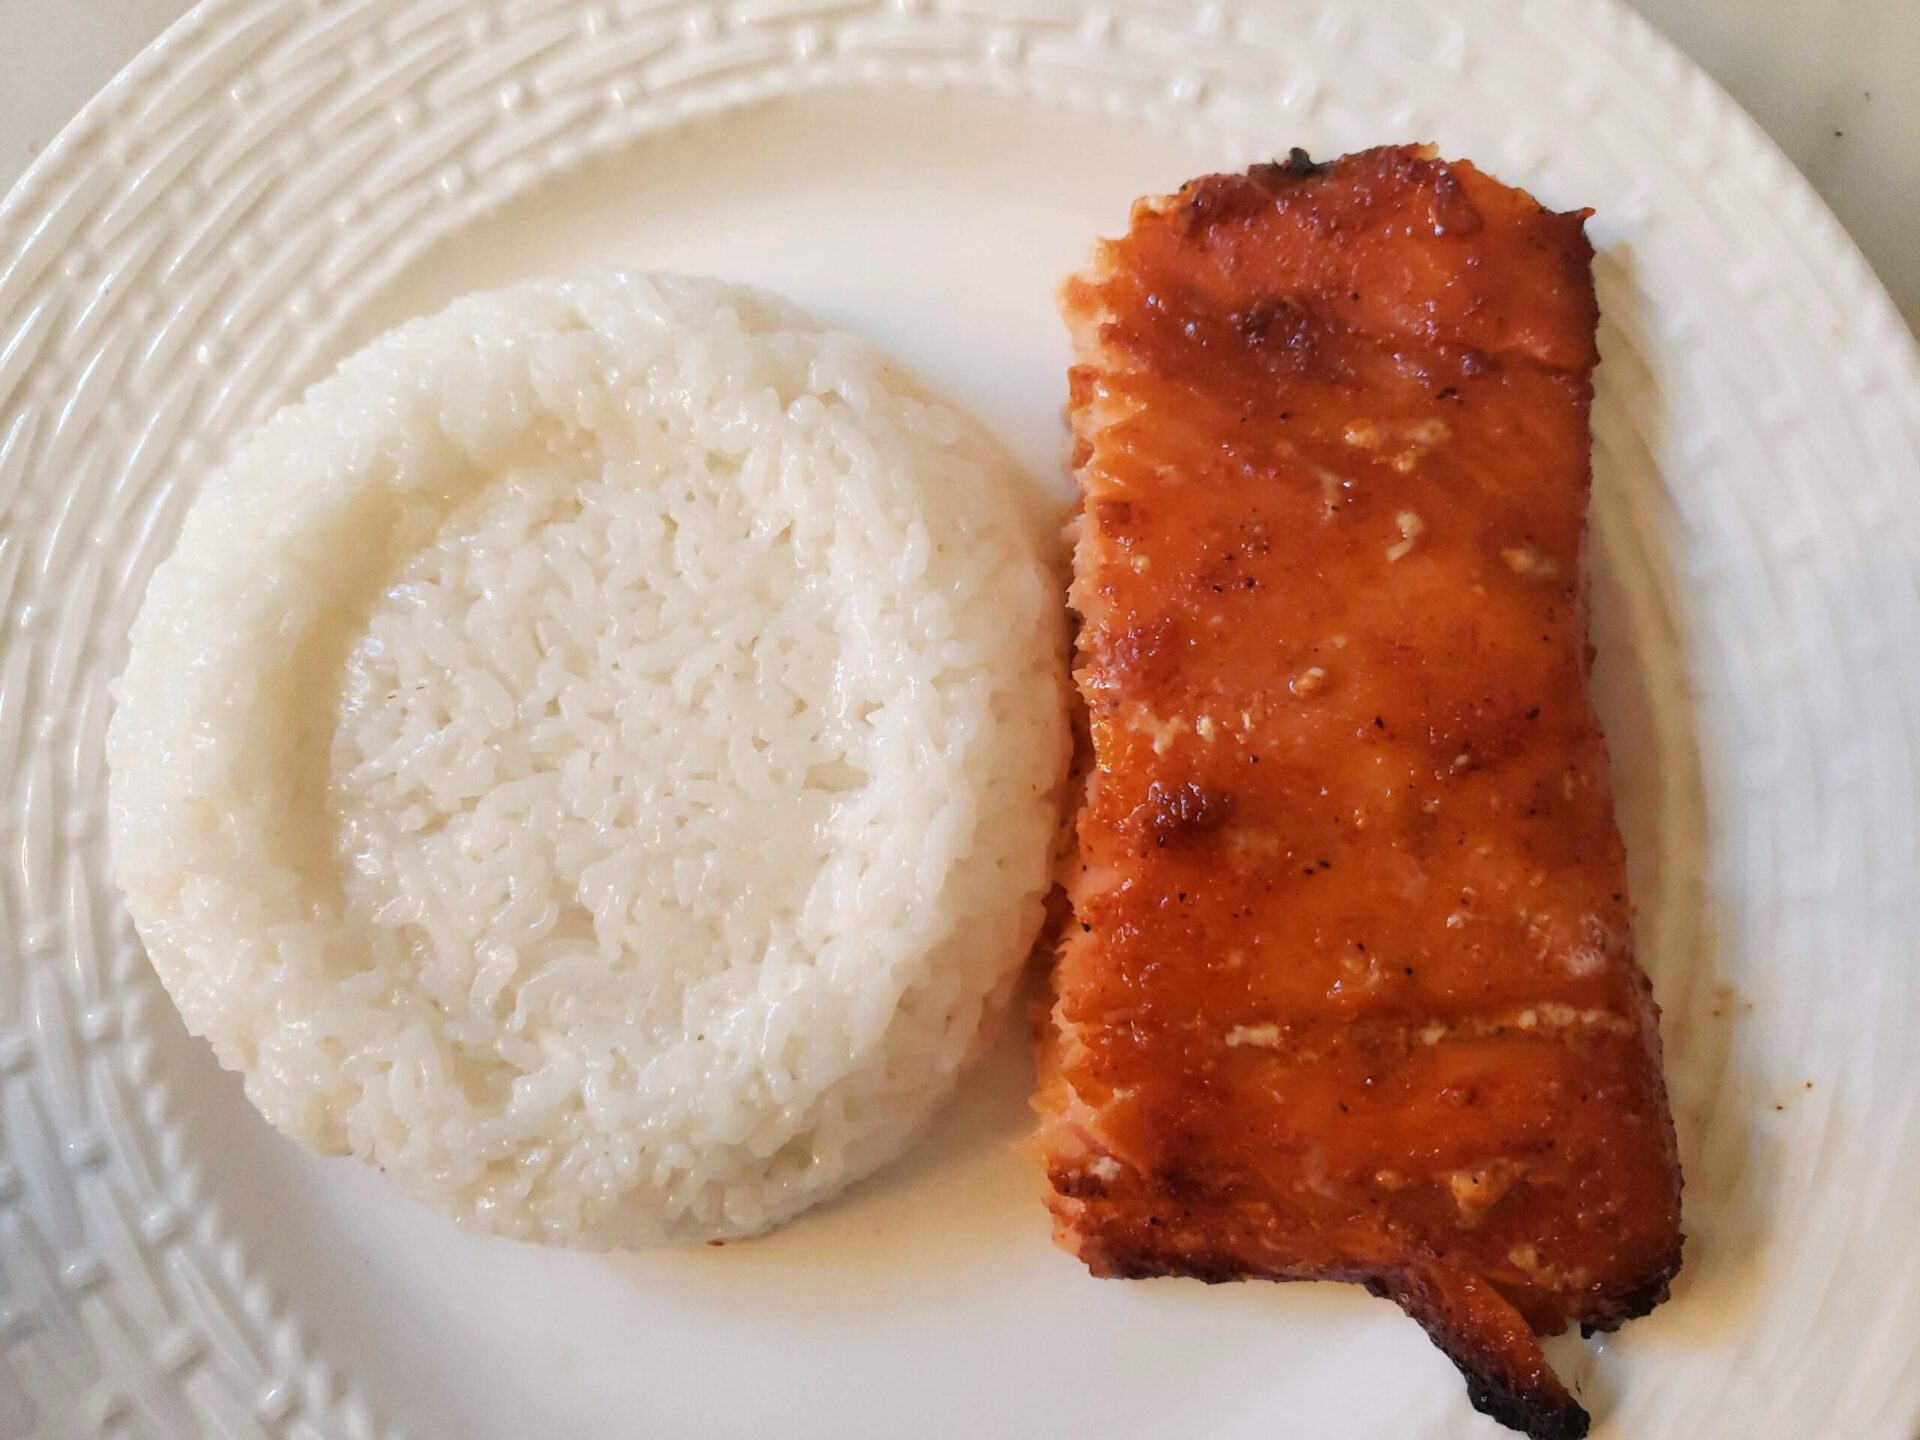 Cedar-Planked-Salmon-with-Sticky-Rice-Costco